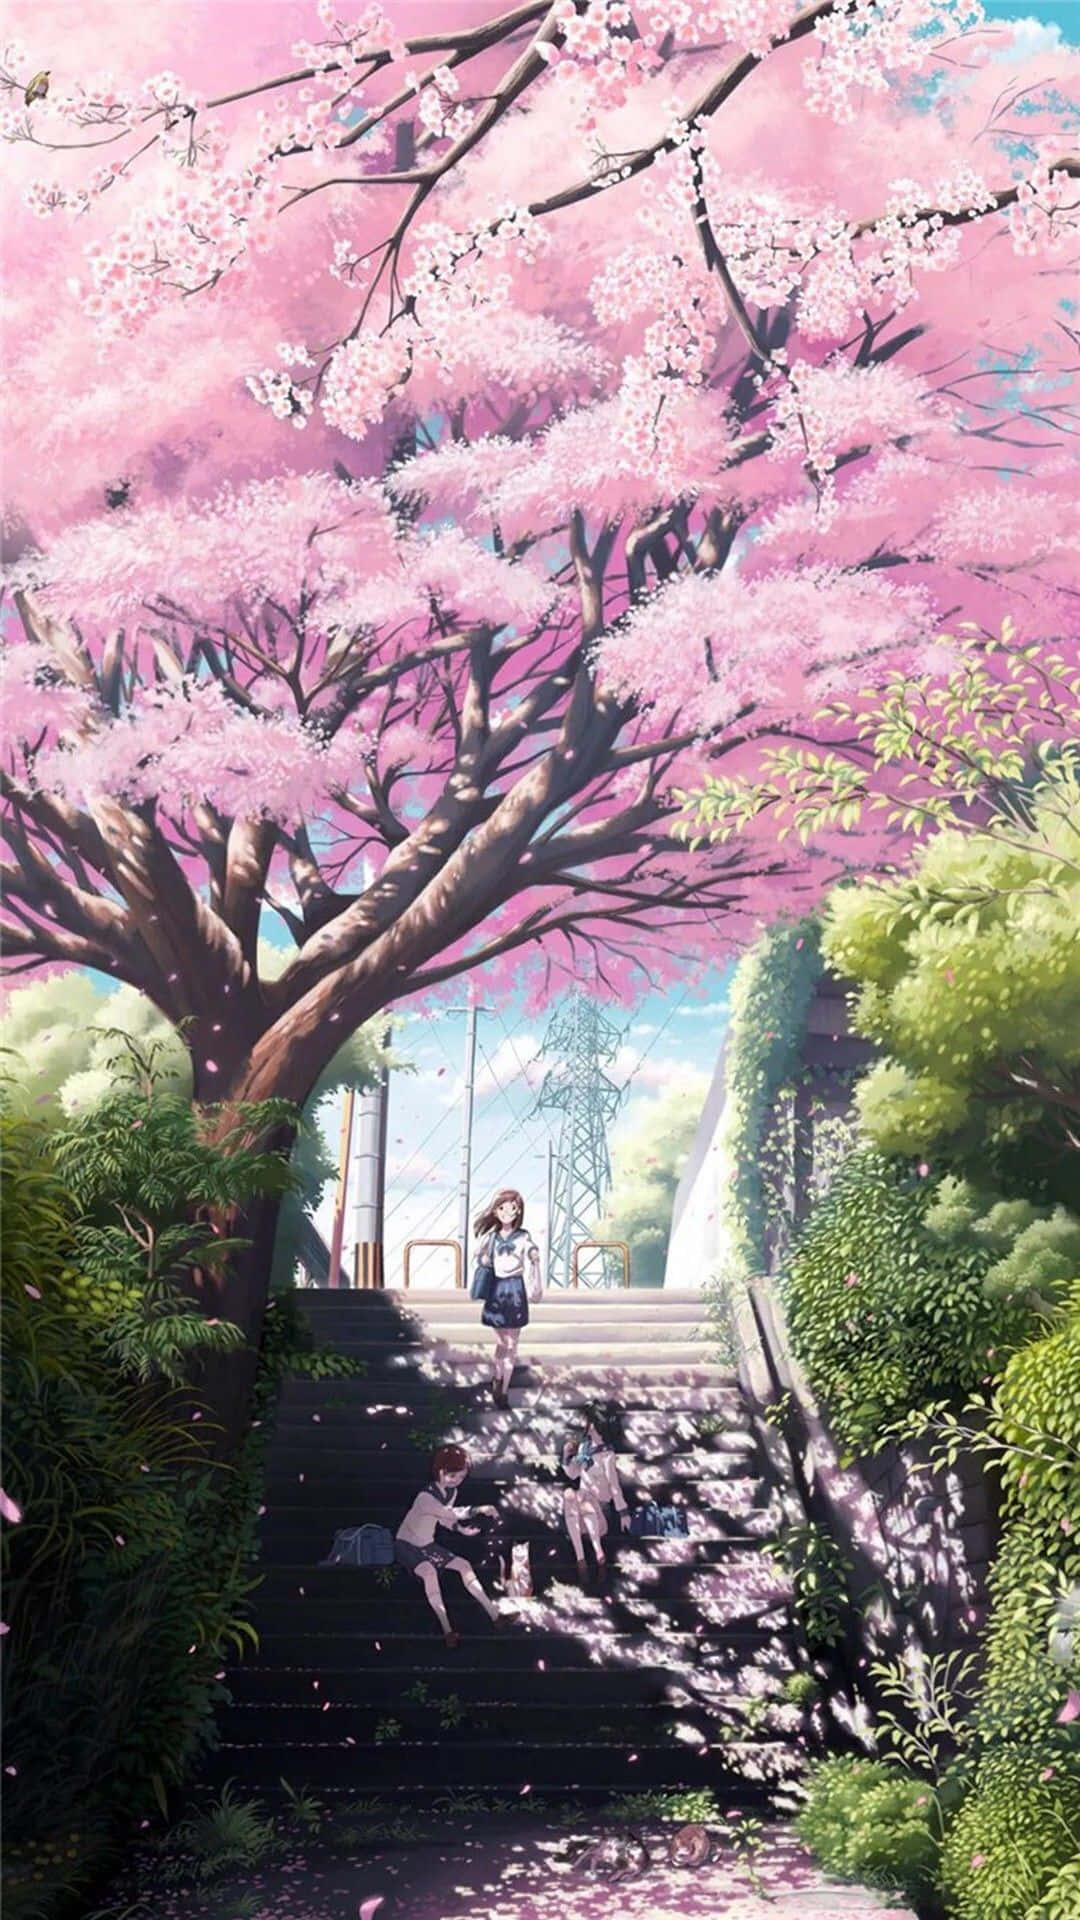 A happy girl surrounded by sakura petals Wallpaper